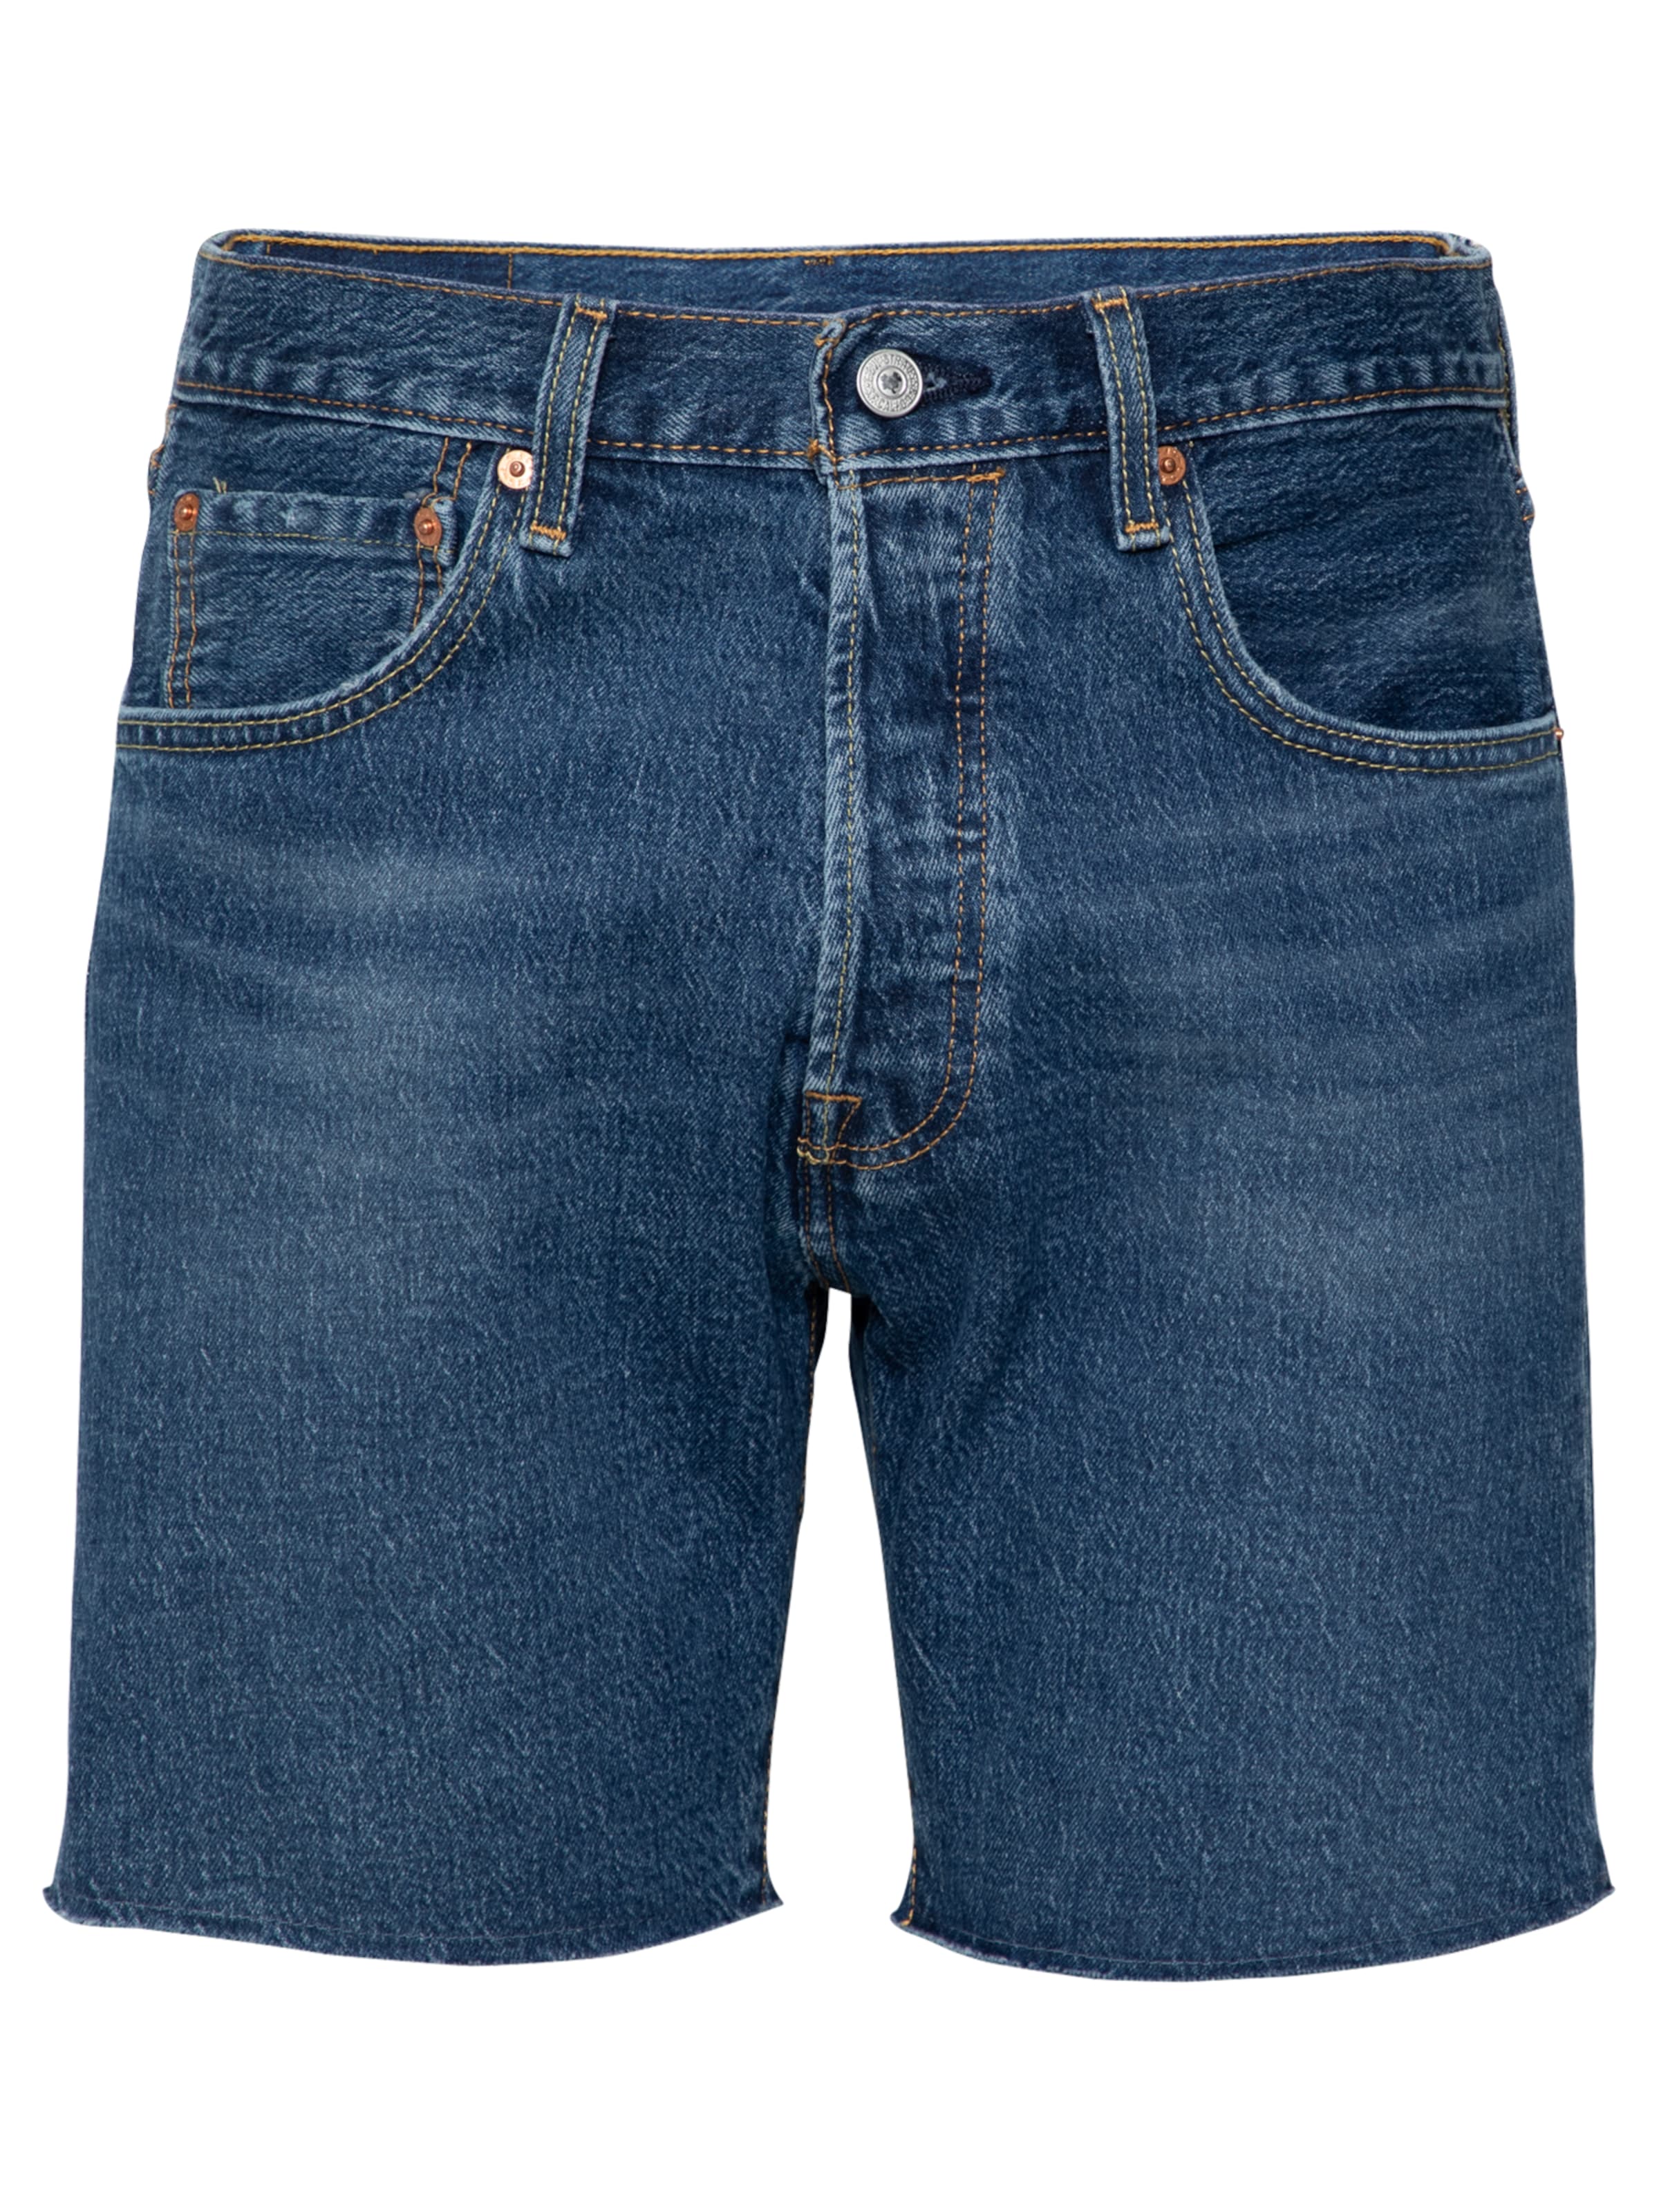 mZggM Pantaloni LEVIS Jeans in Blu 